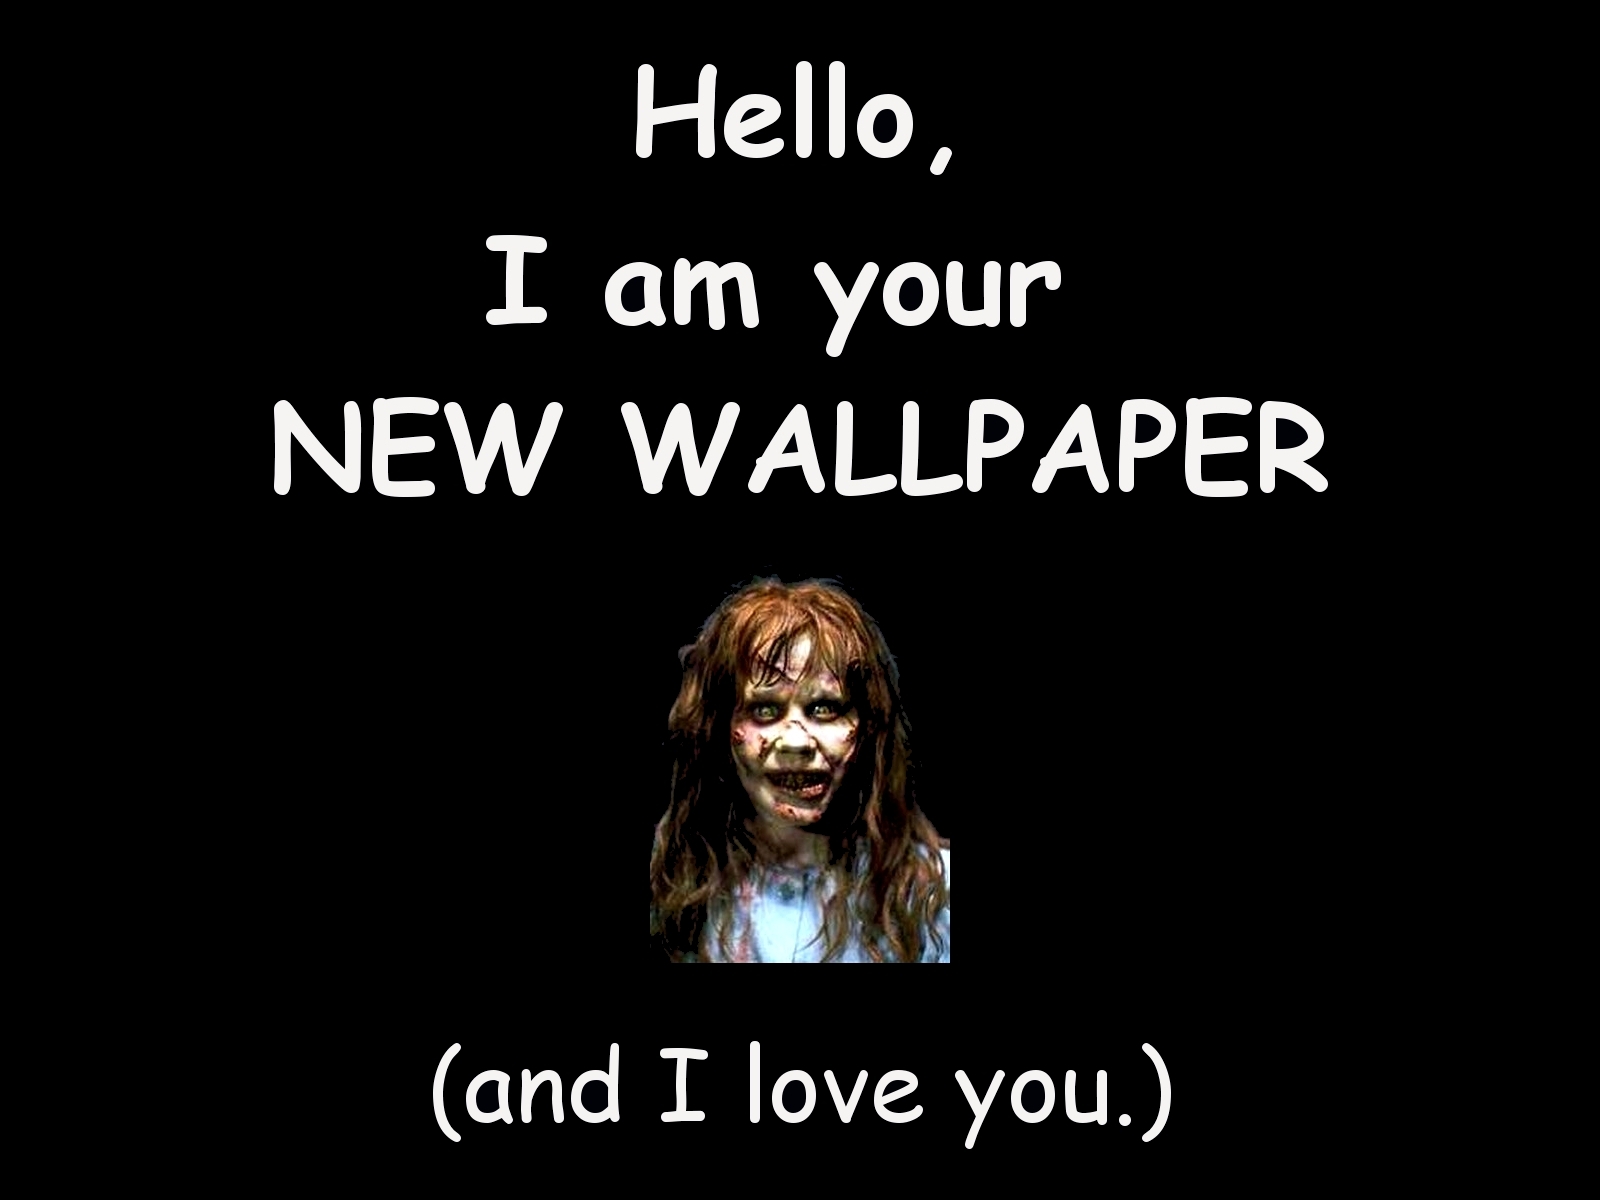 Wallpaper Desk : Humour hd wallpaper, funny hd wallpapersWallpaper ...